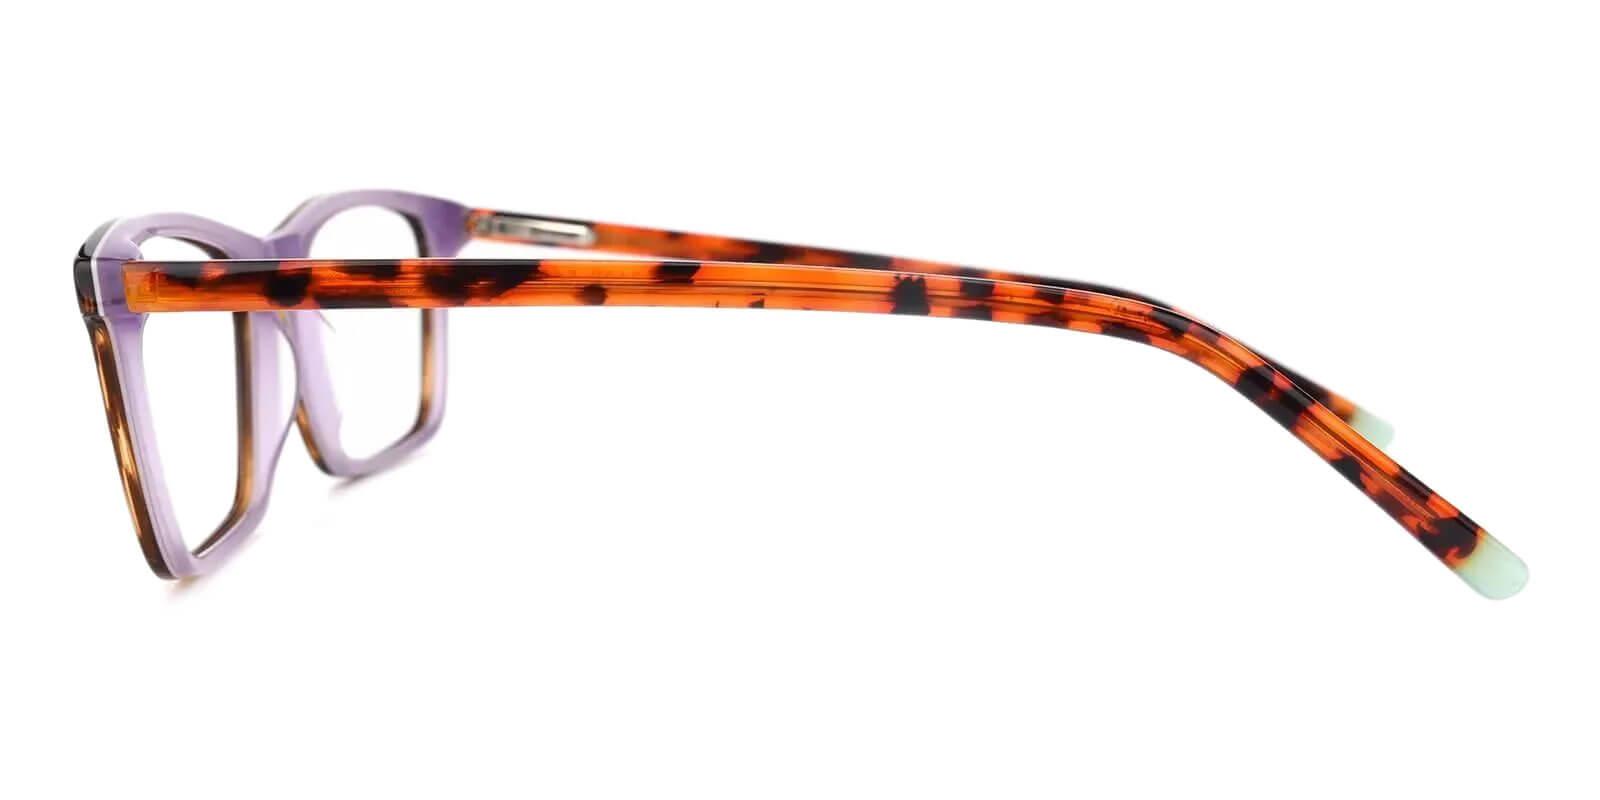 Quasqueton Tortoise Acetate Eyeglasses , SpringHinges , UniversalBridgeFit Frames from ABBE Glasses